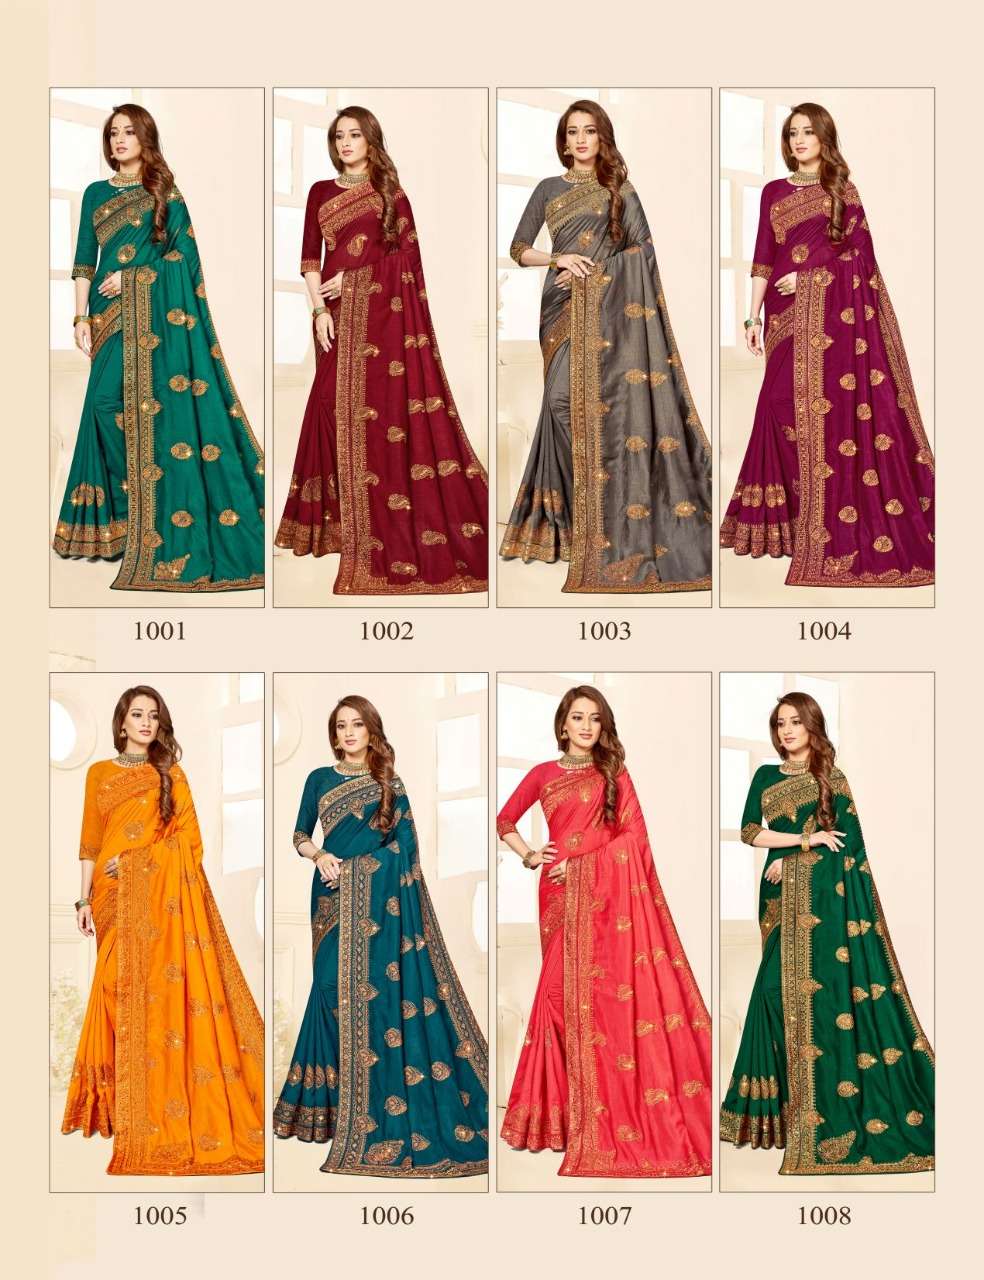 Ronisha Agrima Catalog Fancy Wear Vichitra Silk Sarees